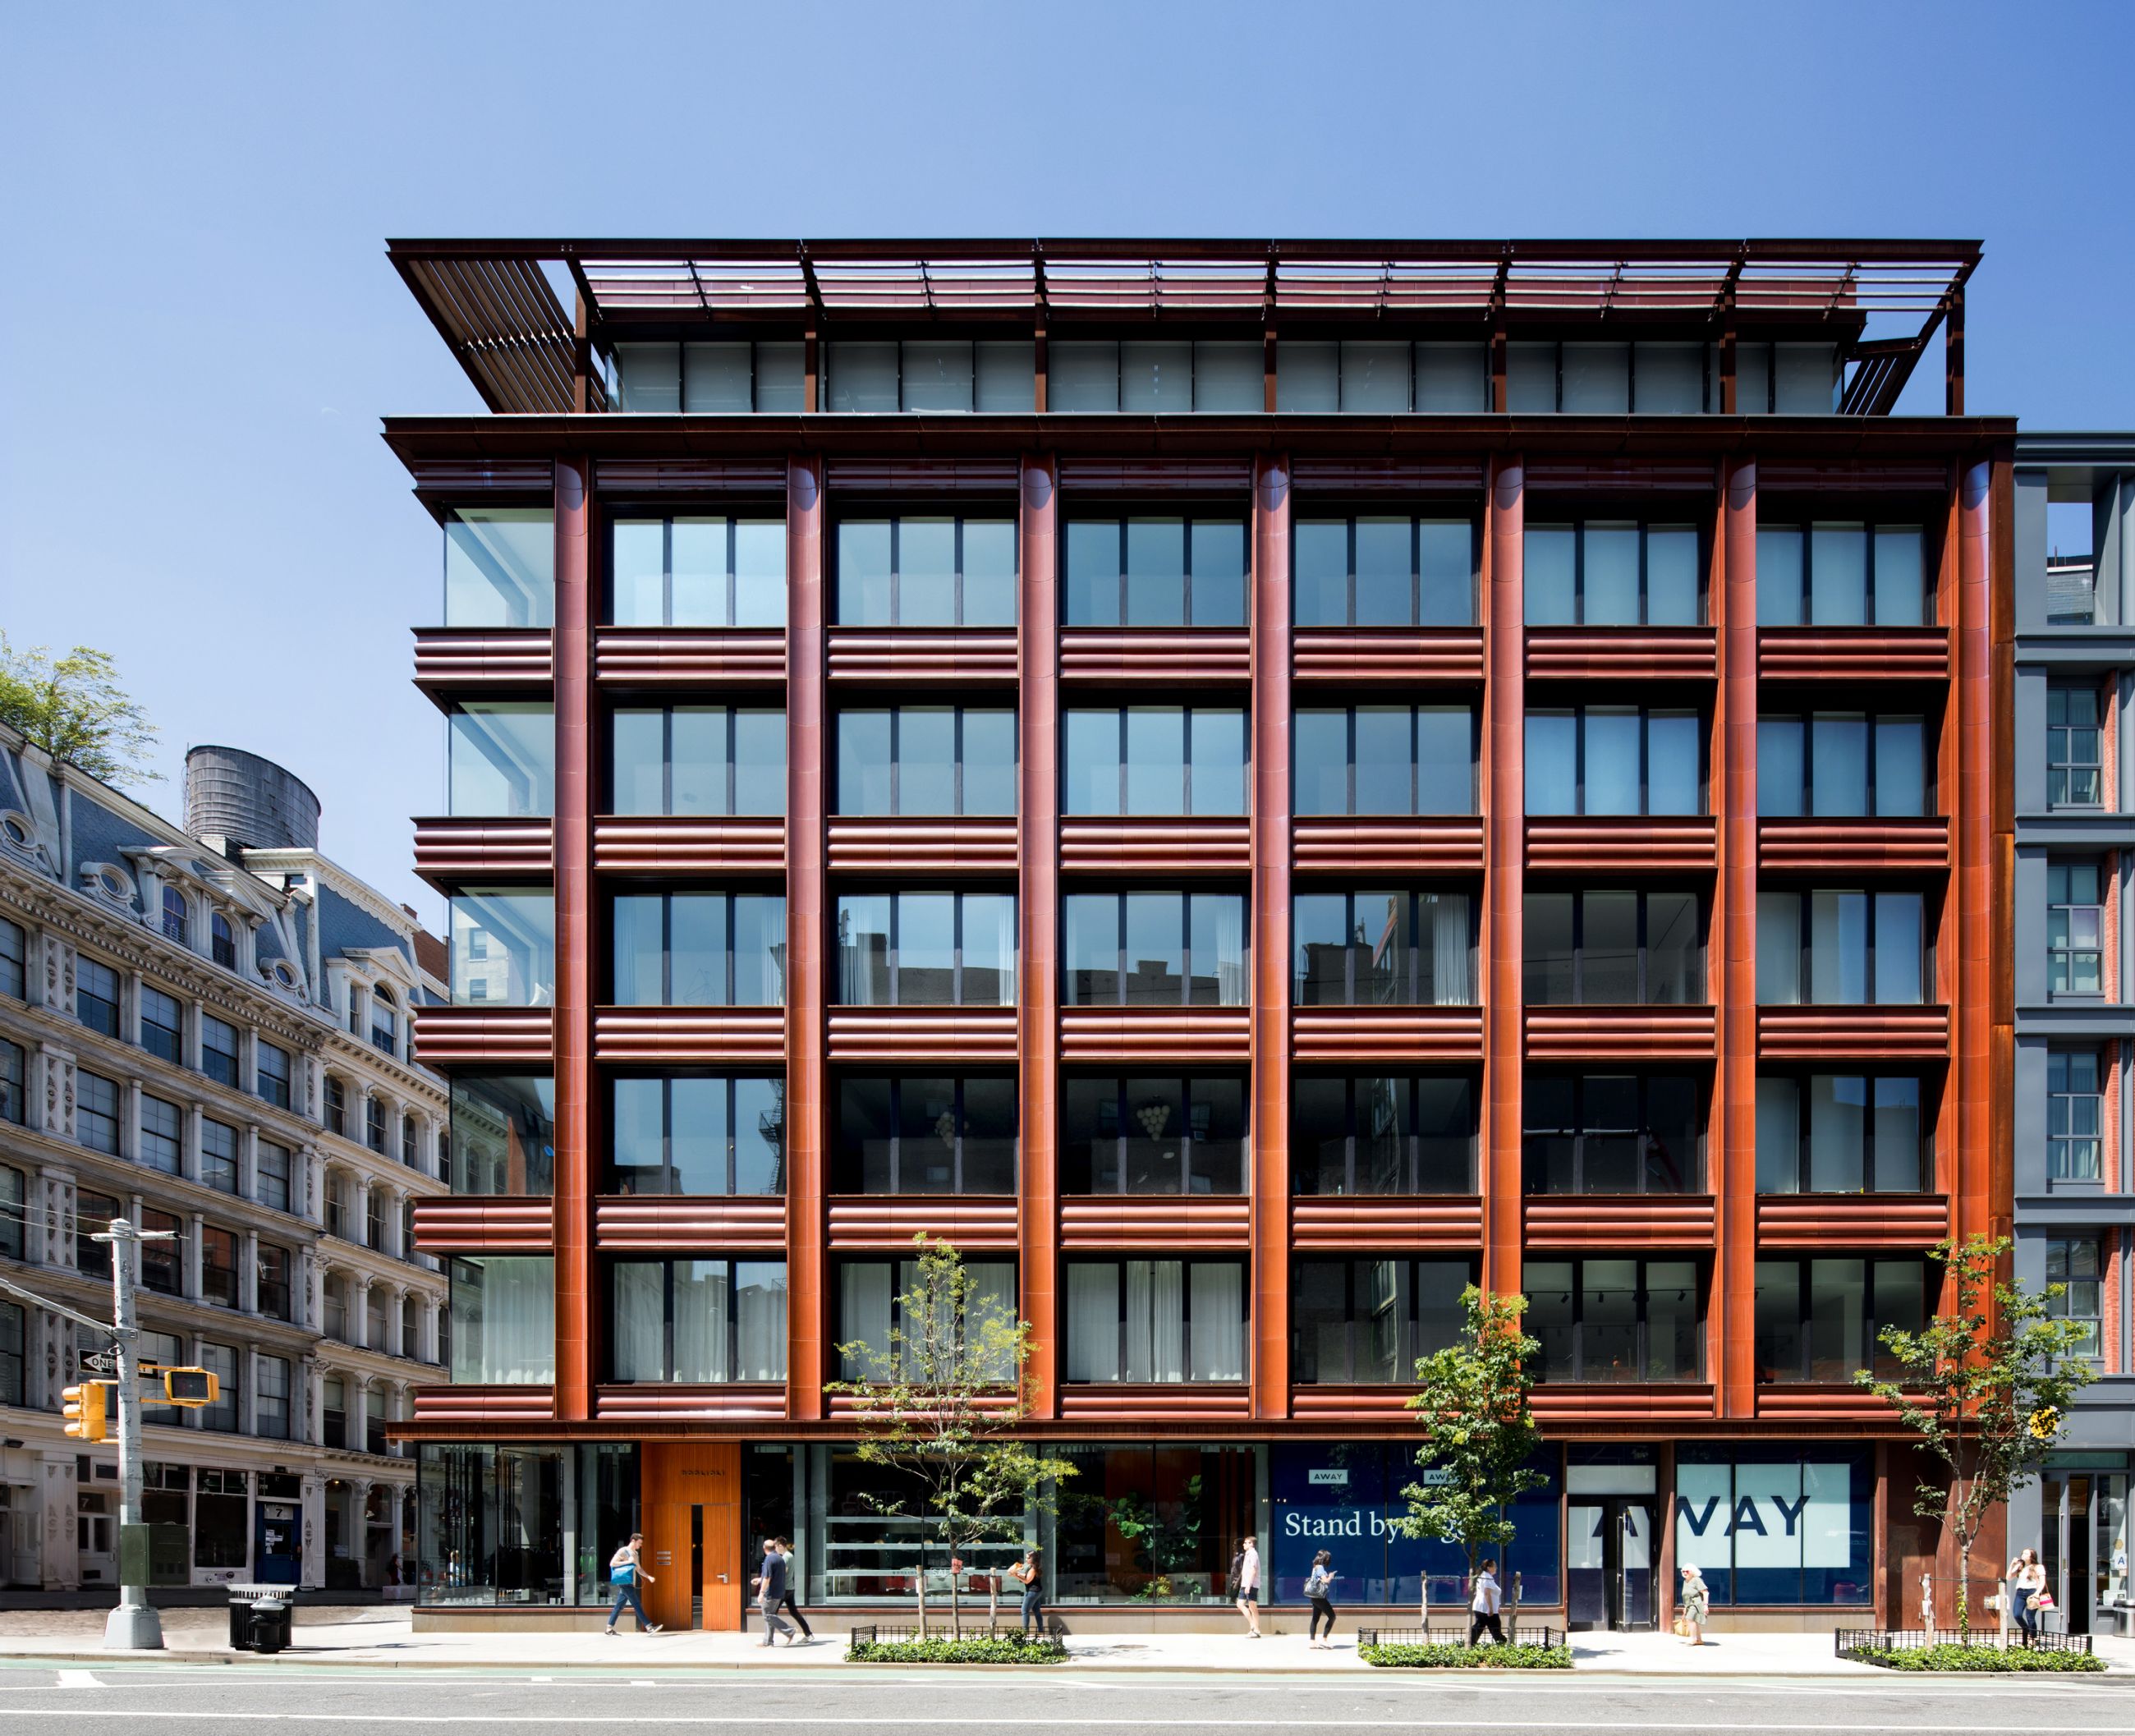 10 Bond Street - Selldorf Architects - New York